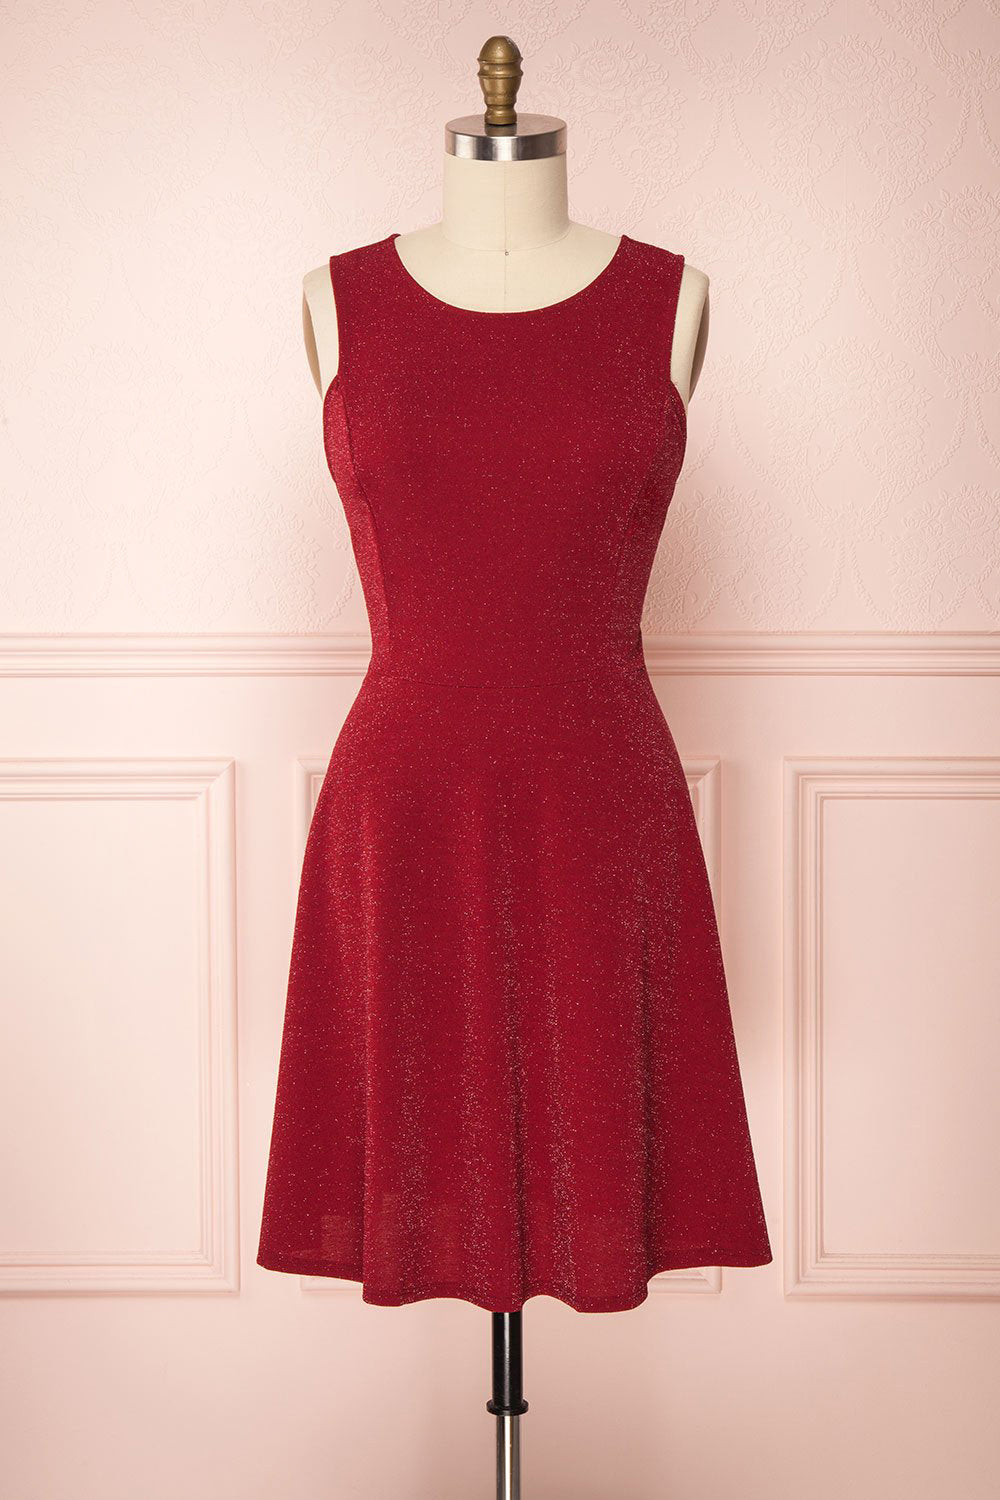 Elya Rubis Burgundy Plus Size A-Line Dress | Boutique 1861 plus